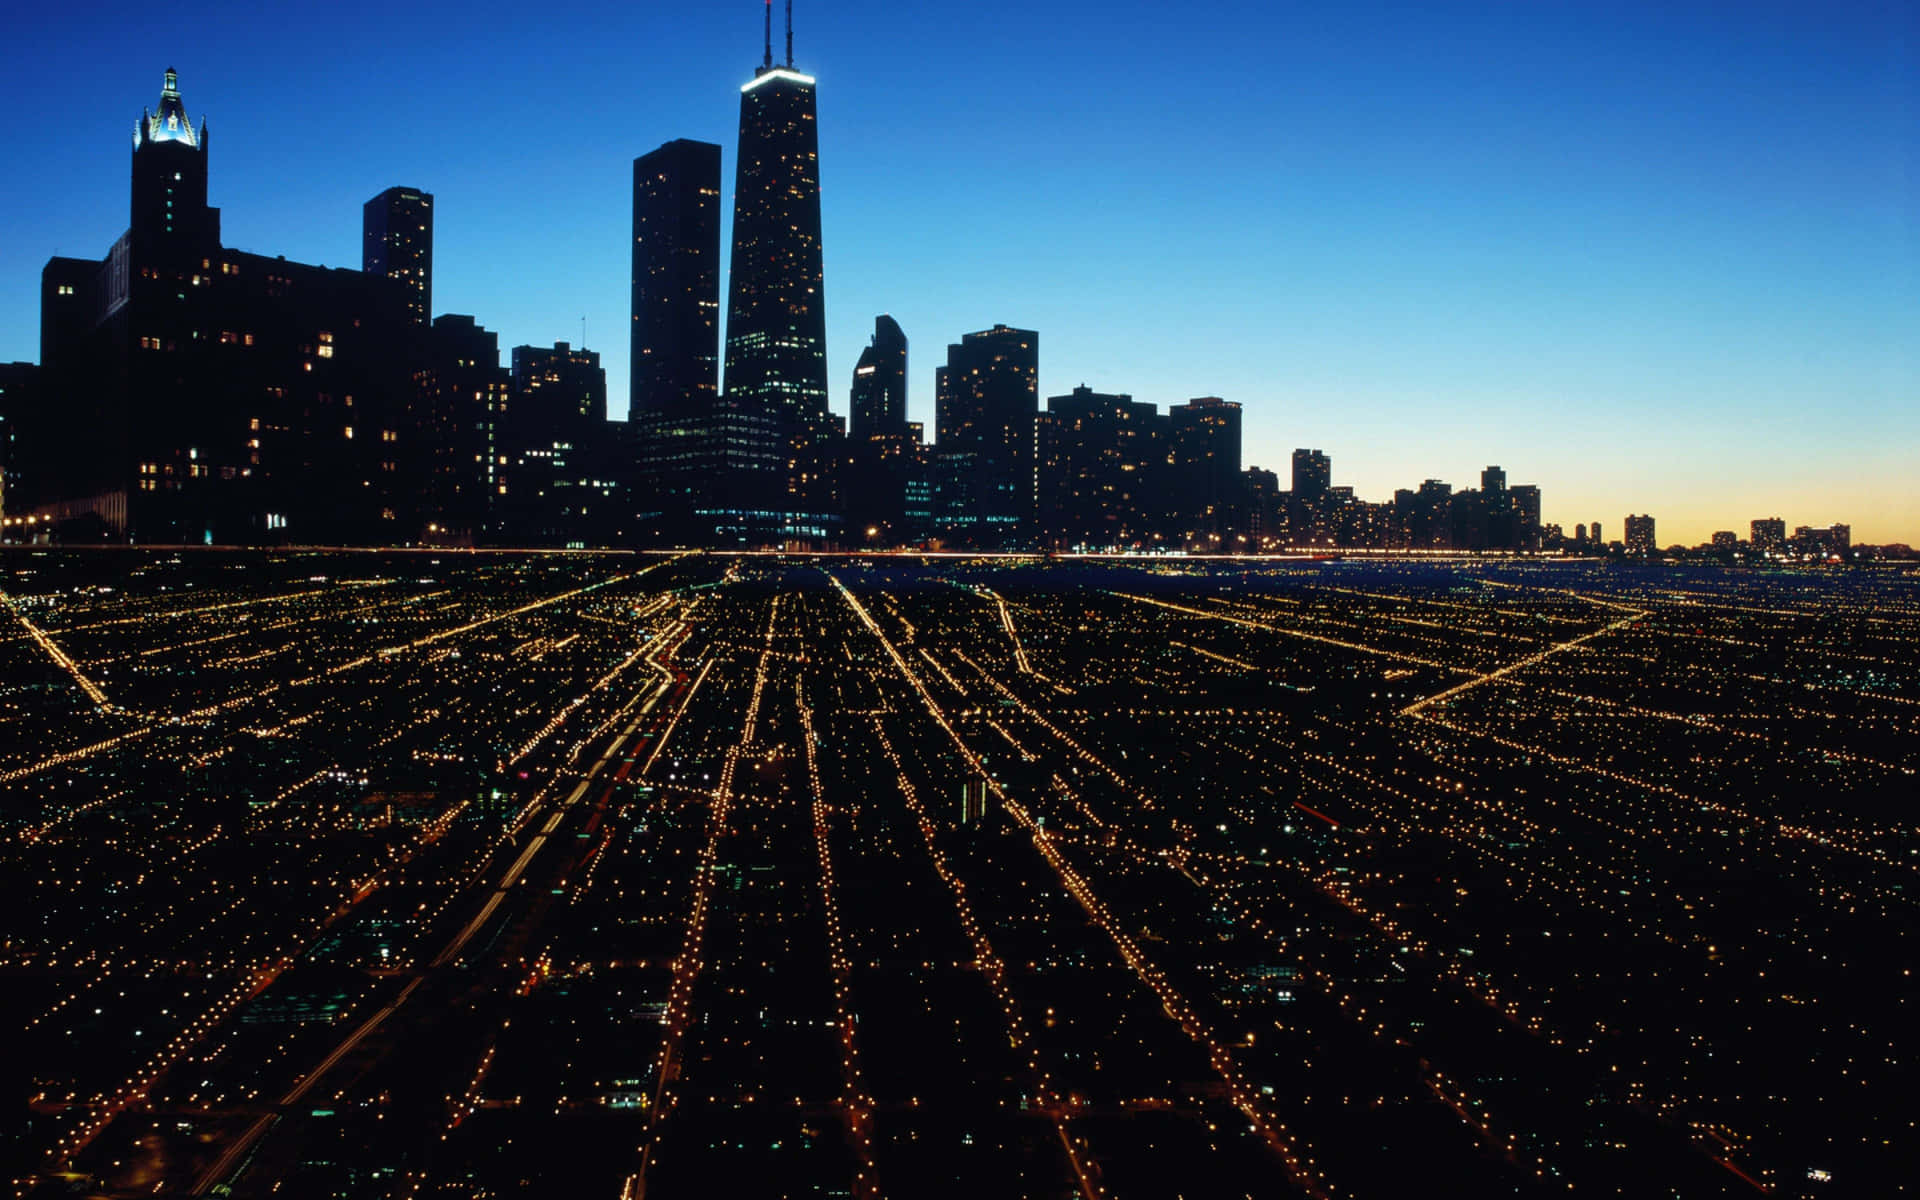 A bird's eye view of beautiful downtown Chicago